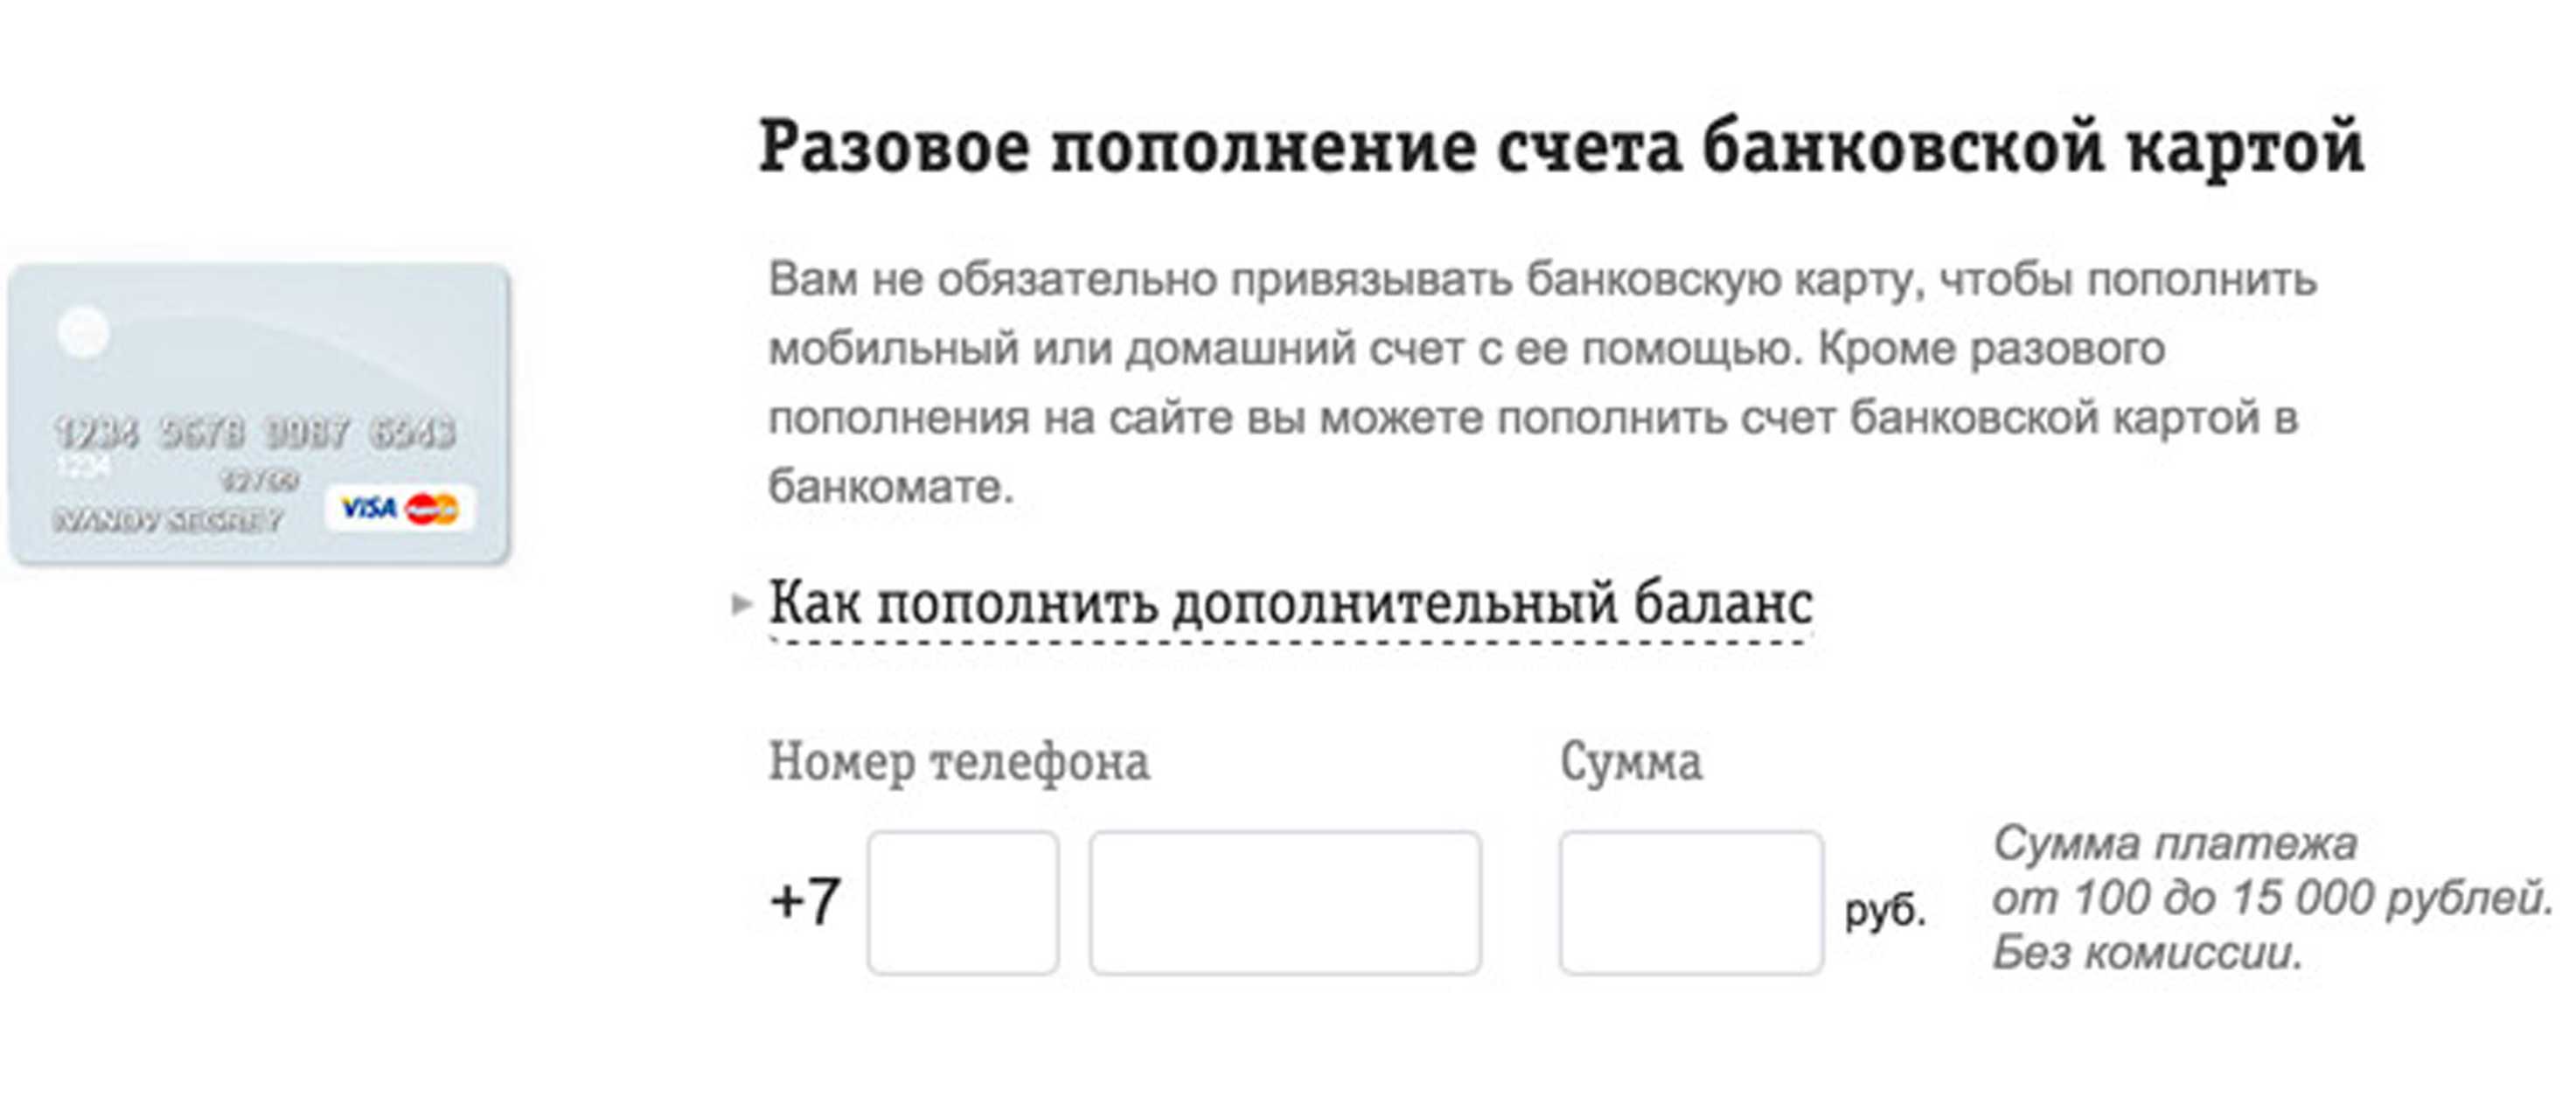 Билайн: пополнение счета, проверка баланса, перевод денег на другой номер, вывод на карту | kak-popolnit.ru